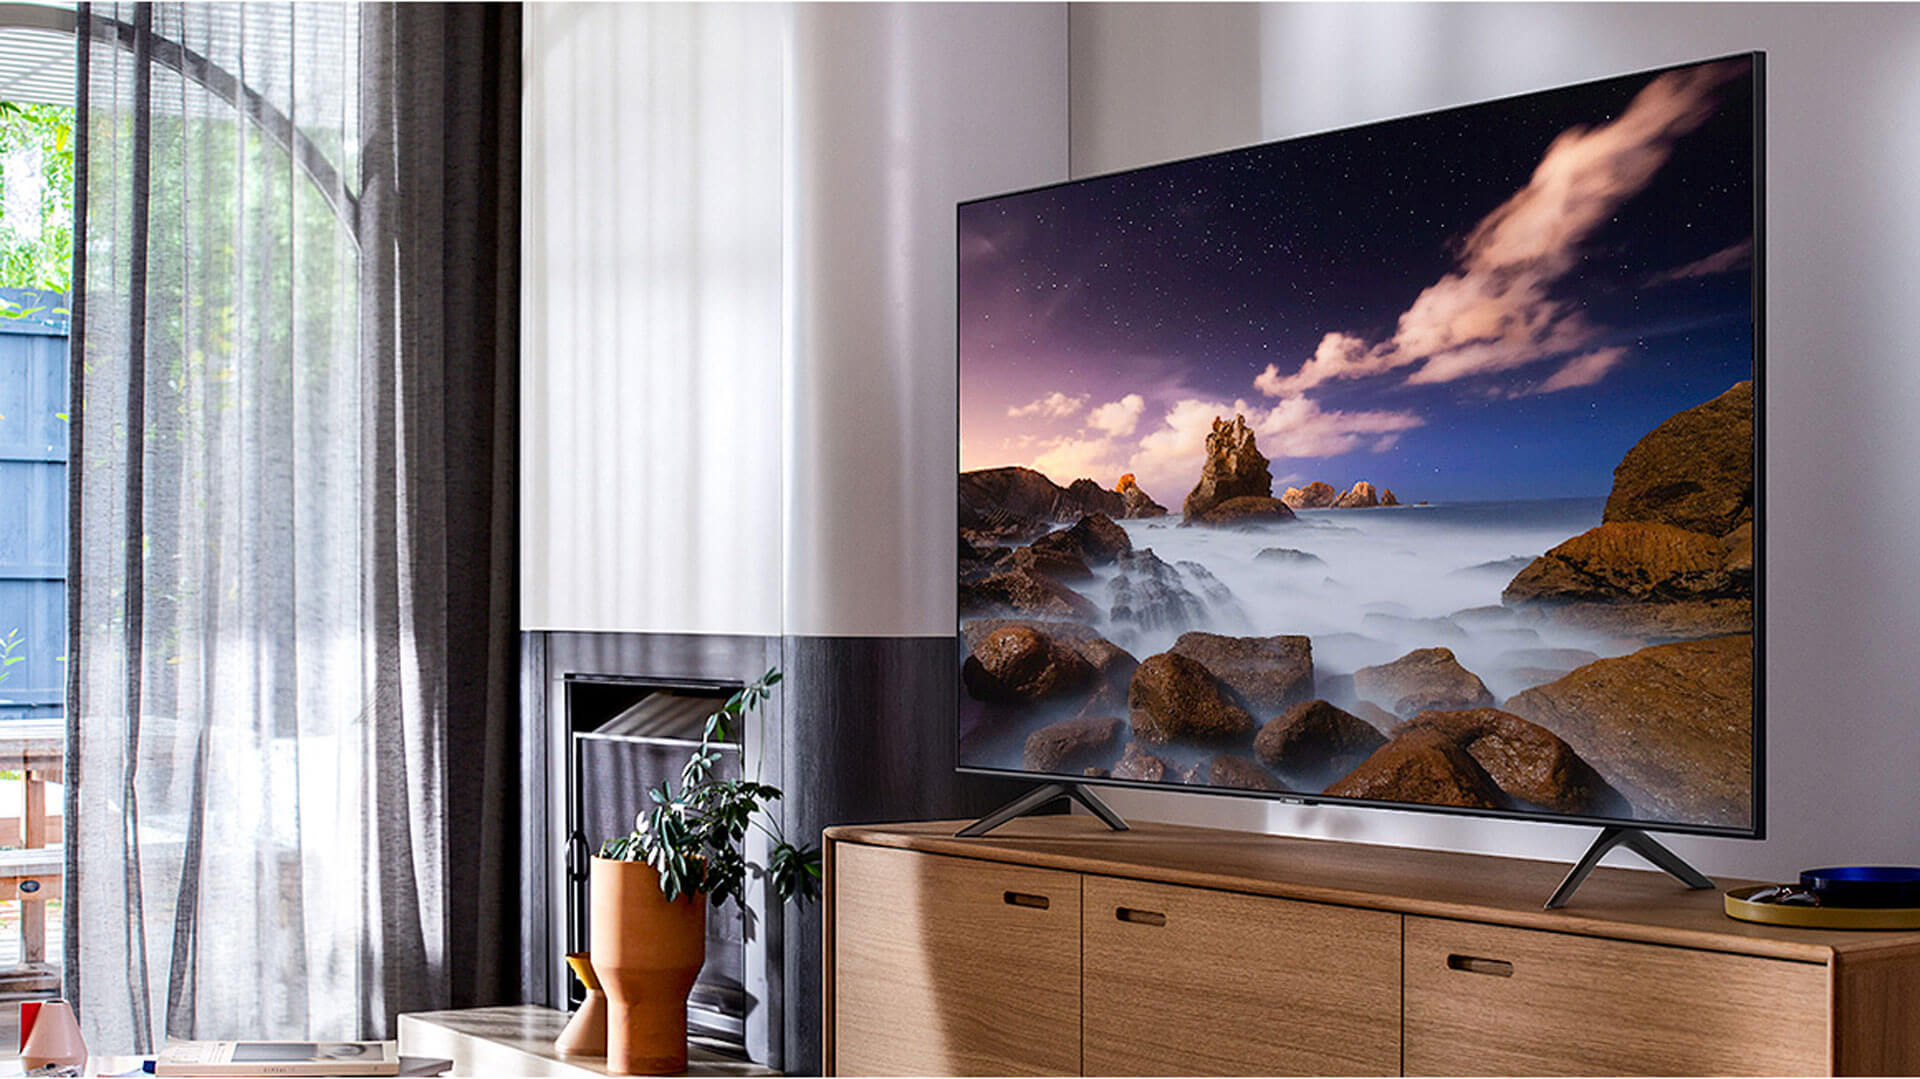 Samsung Tv 4k